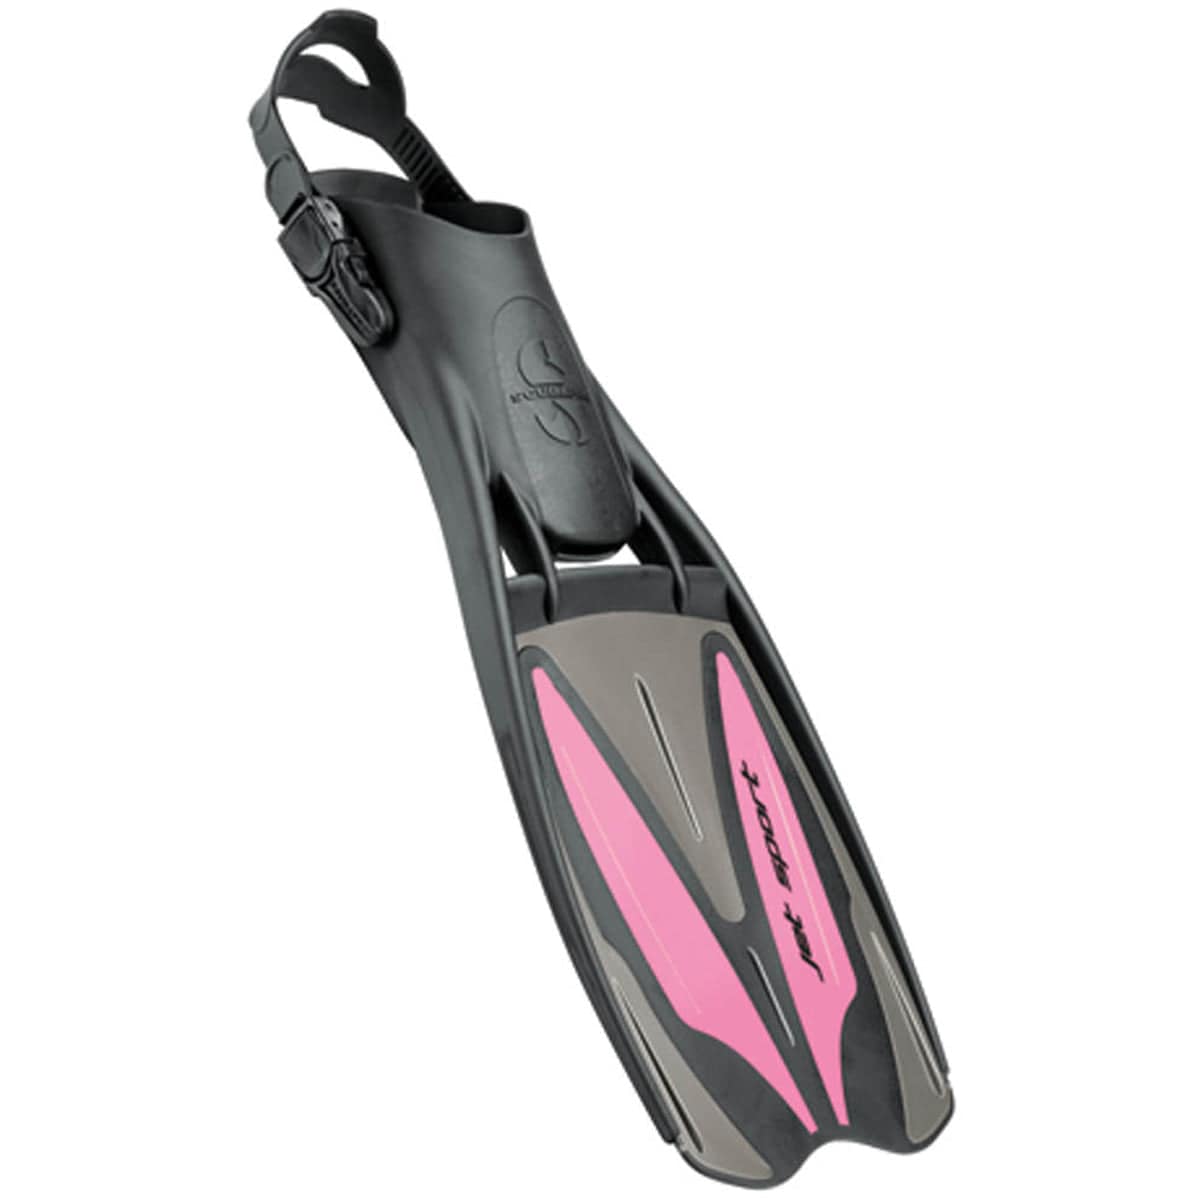 Scubapro Jet Sport Open Heel Diving Fin - Black/Gray/Pink - 1